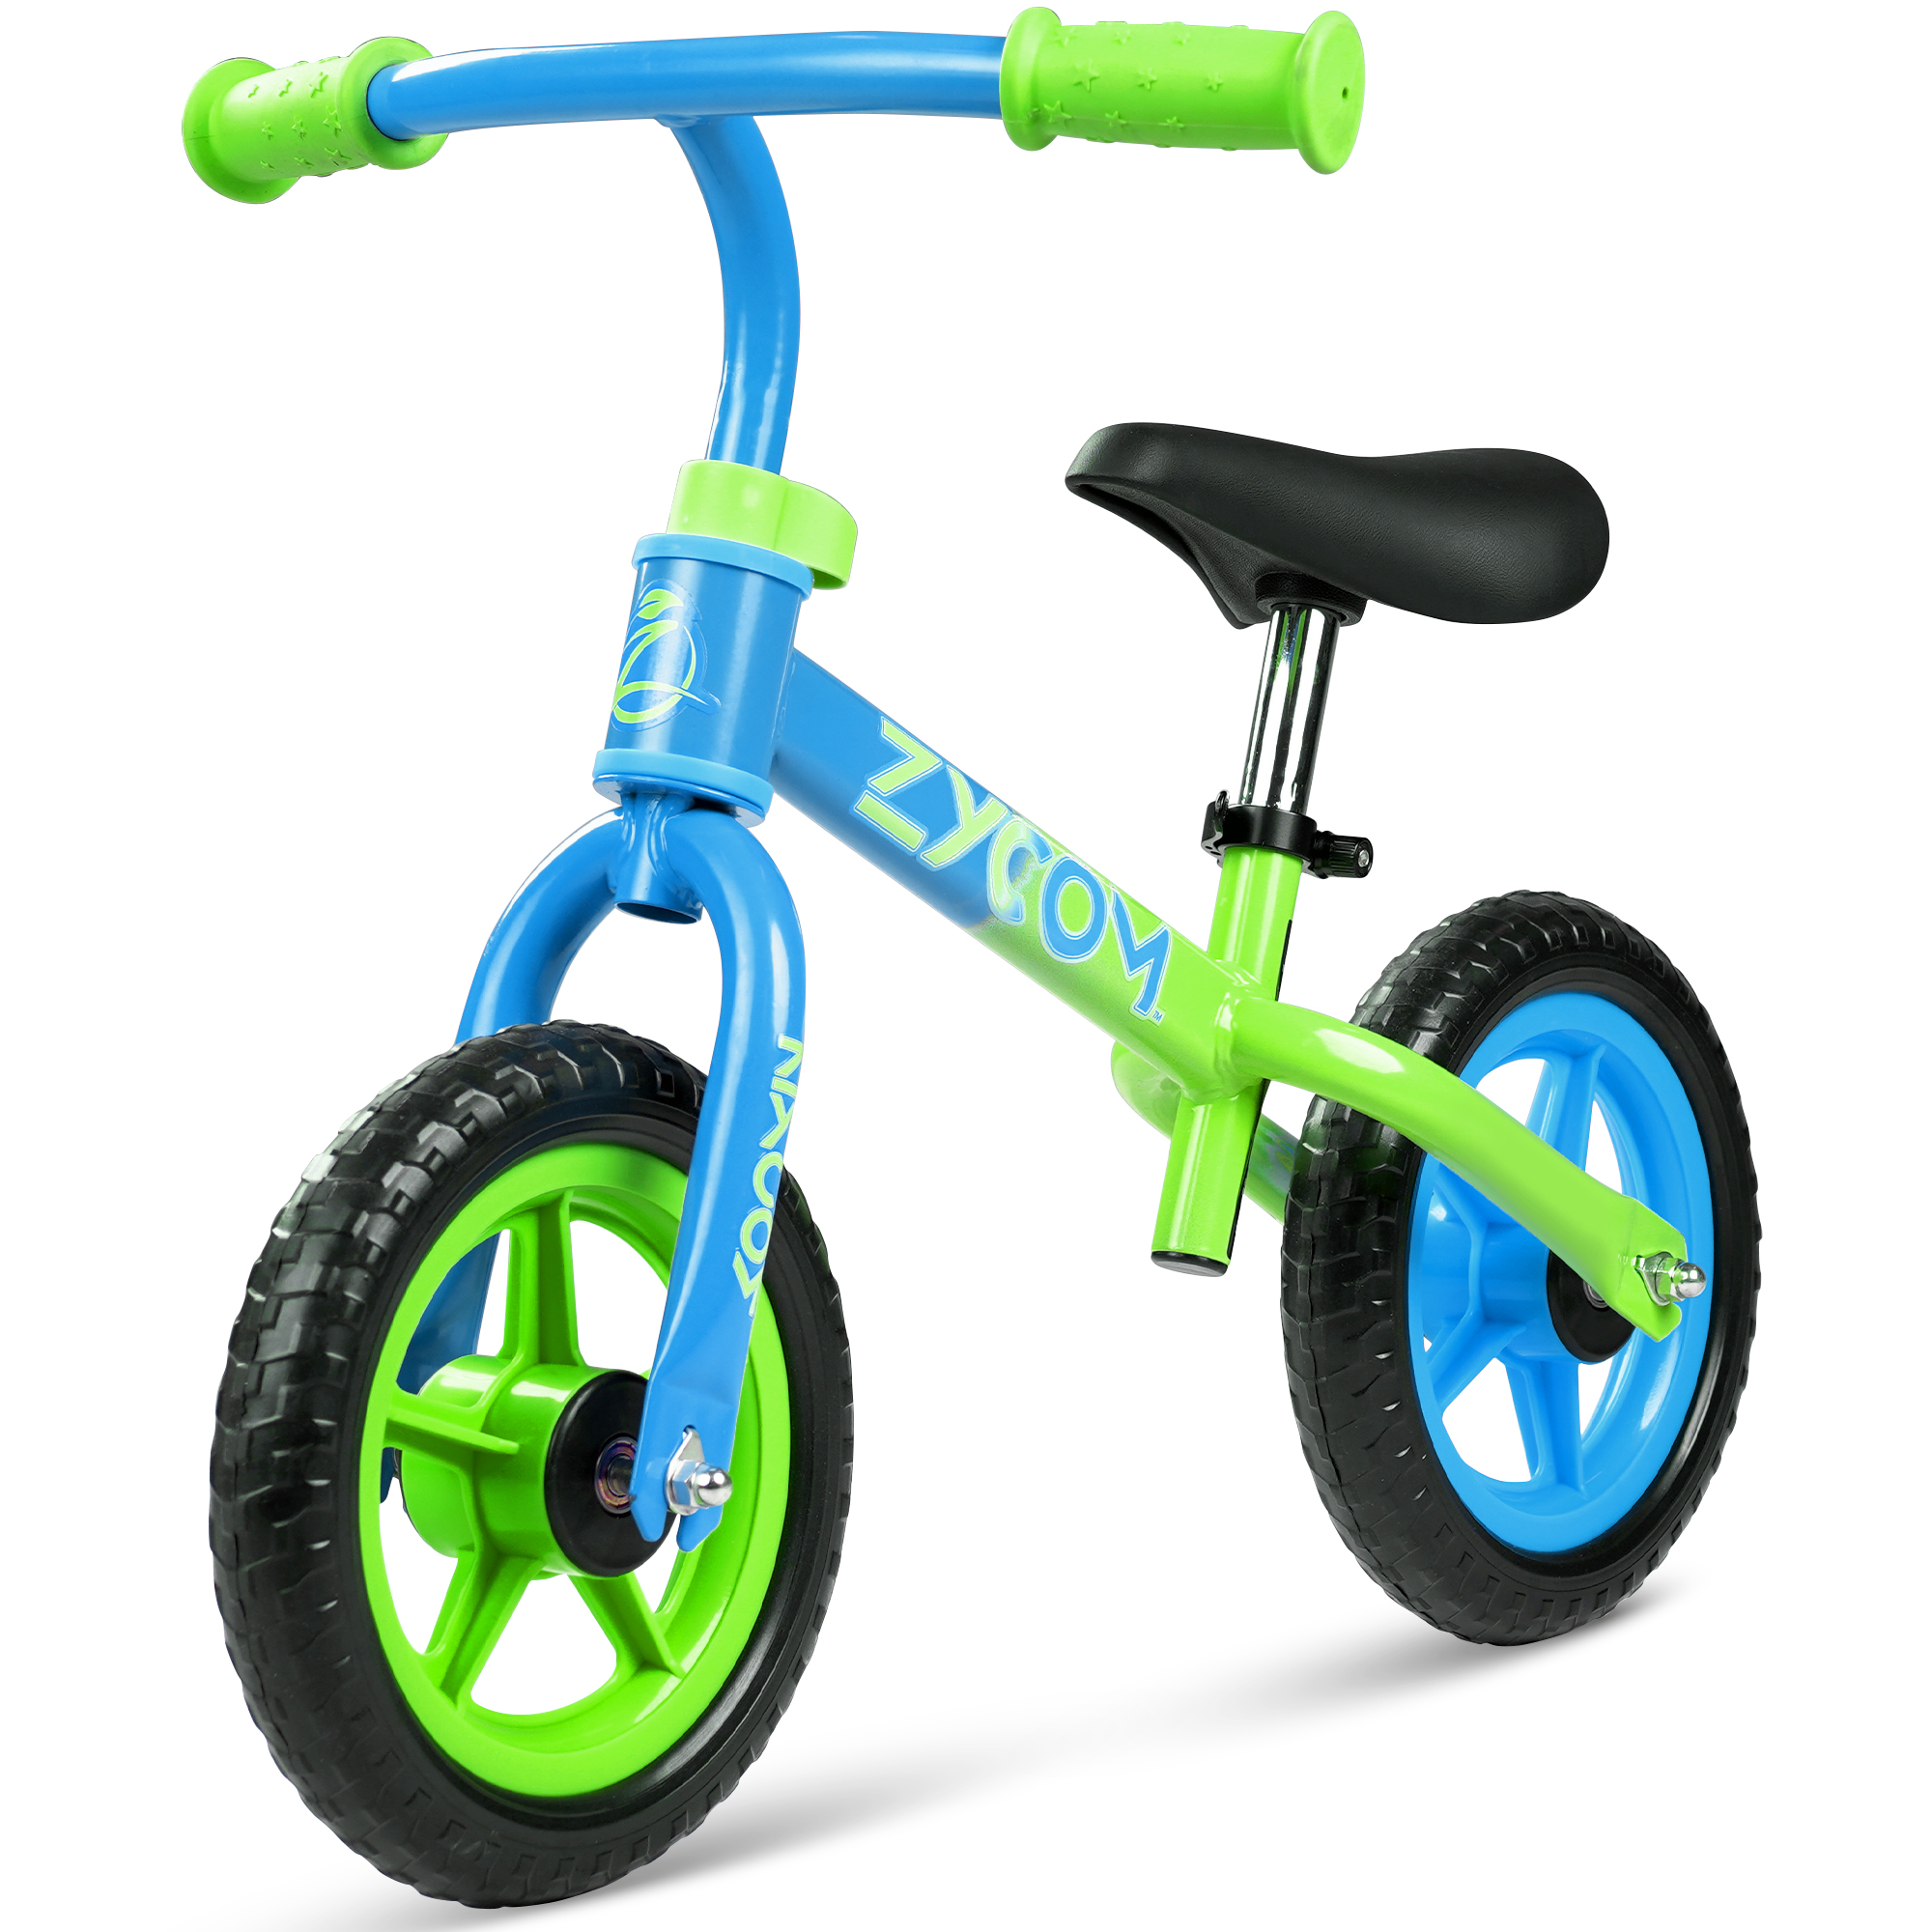 Zycom 10-inch Toddlers Balance Bike Adjustable Helmet Airless Wheels Lightweight Training Bike Blue - image 12 of 12